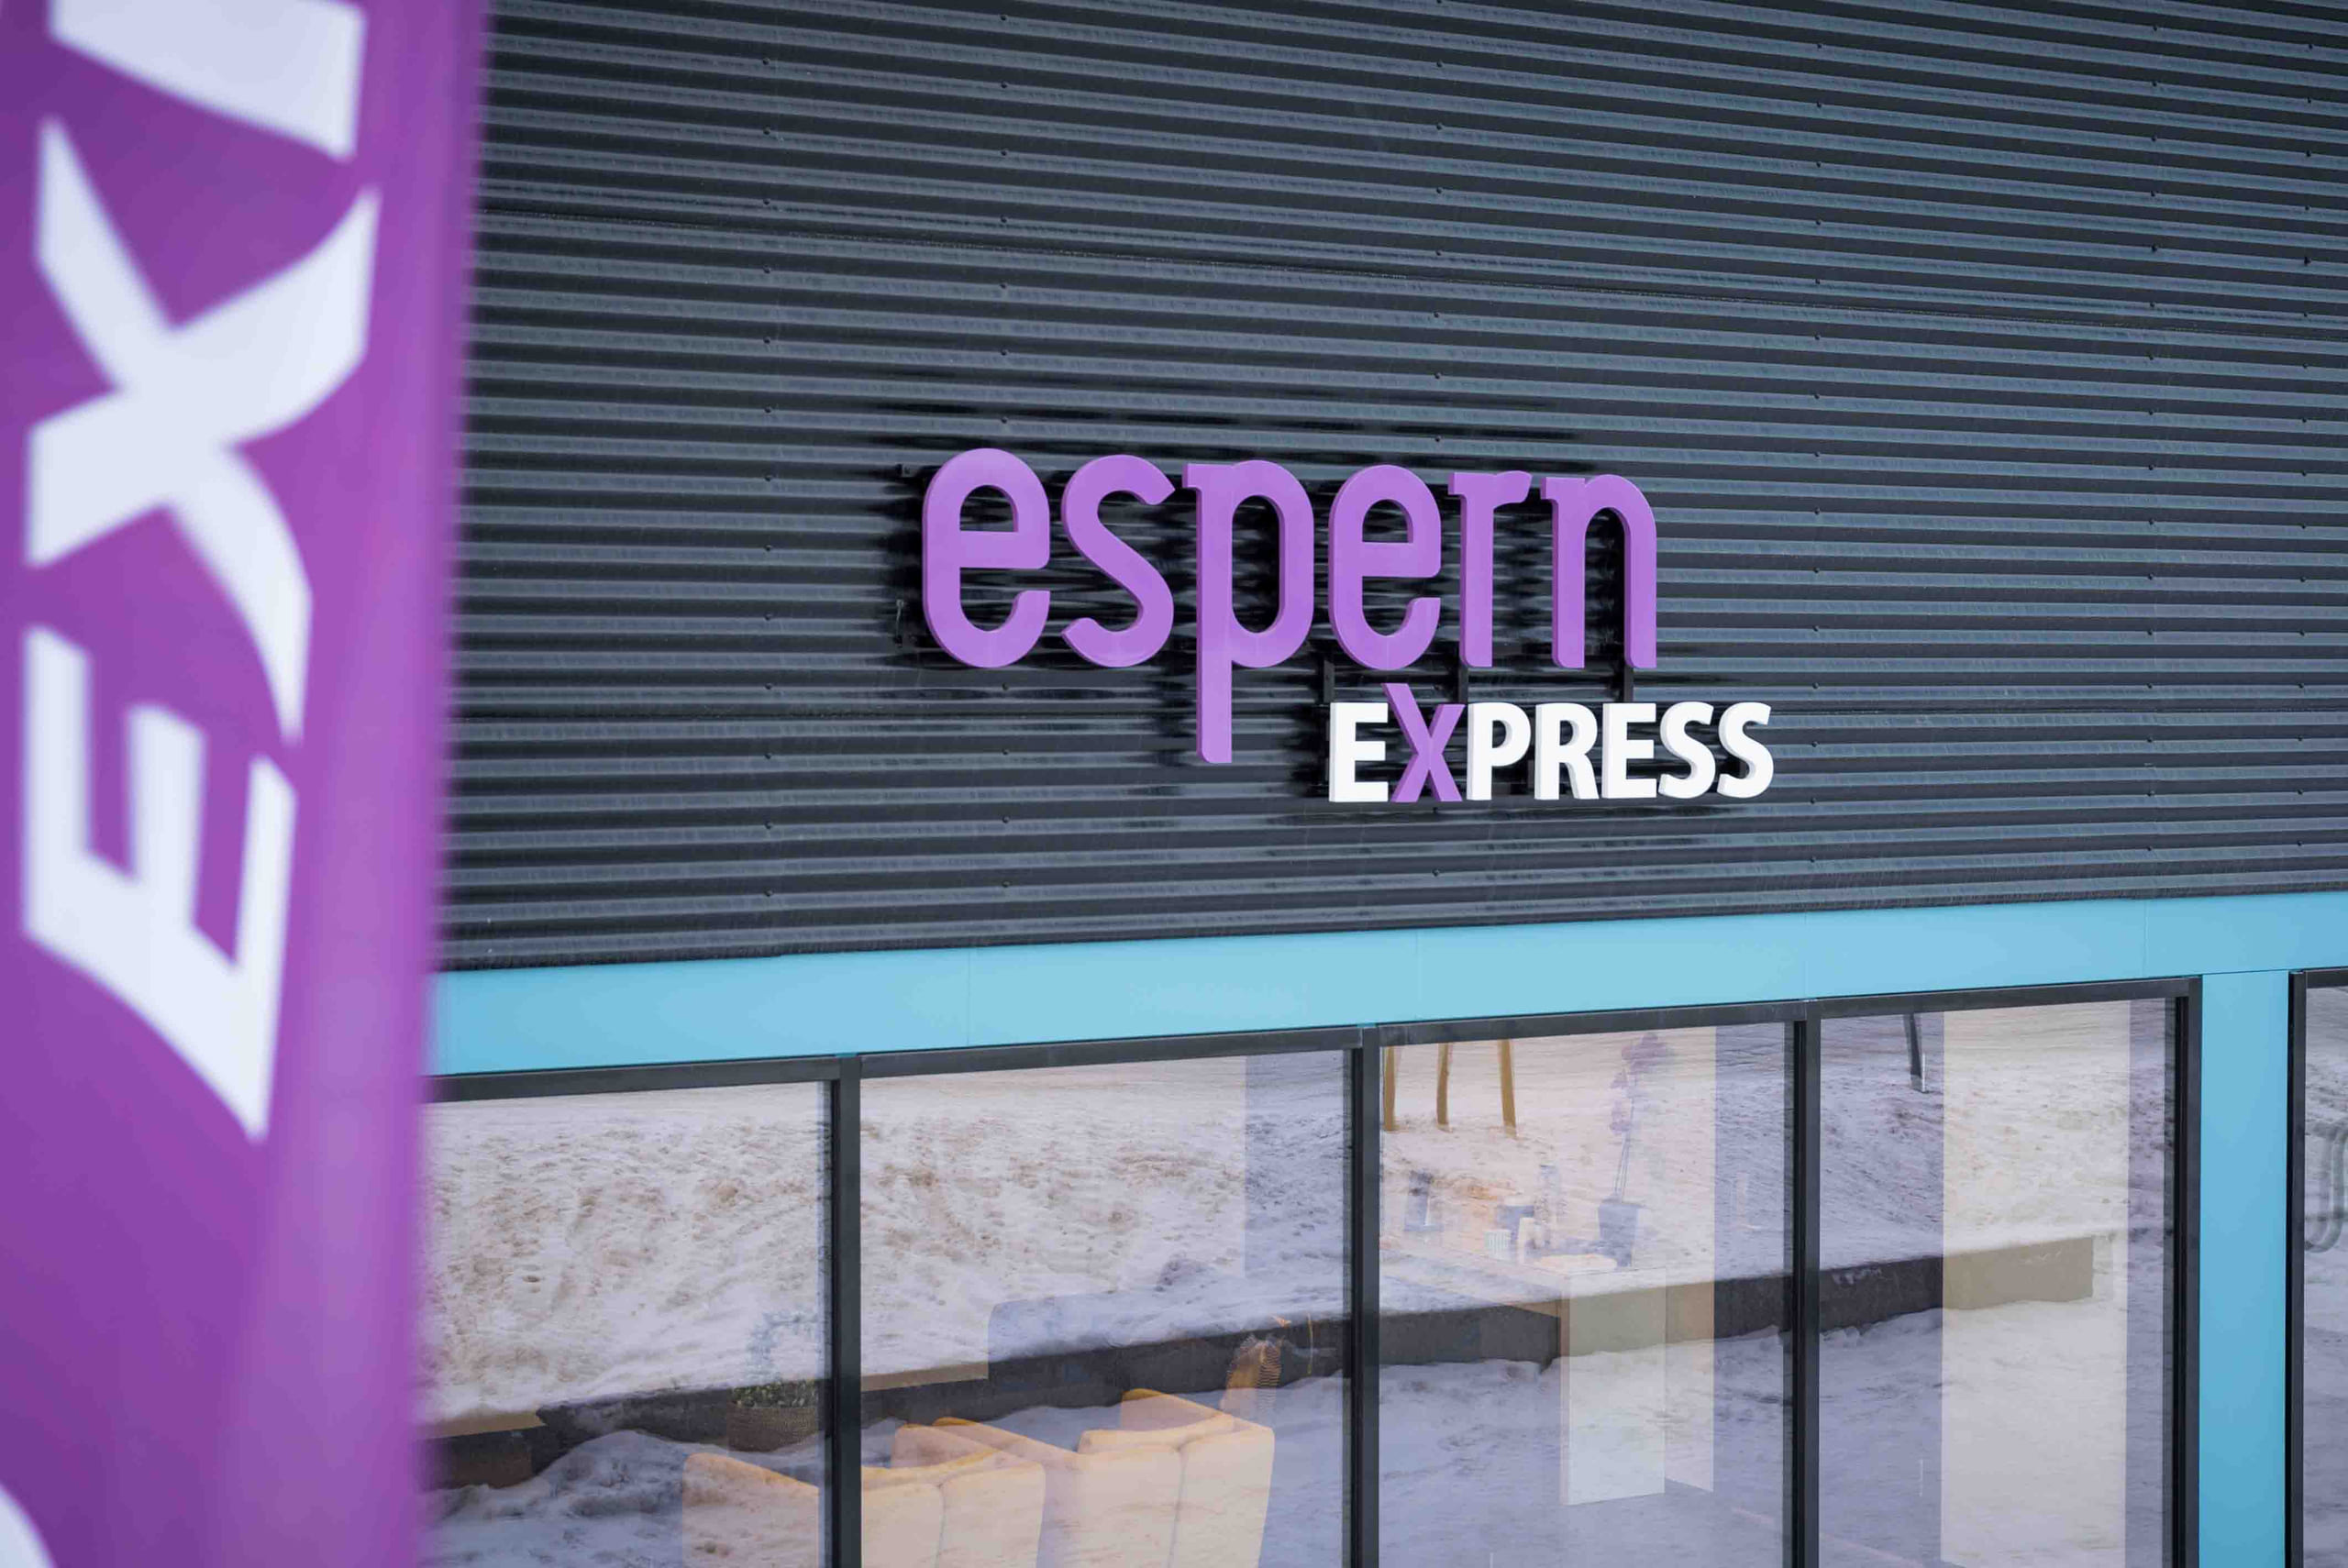 Espern Express